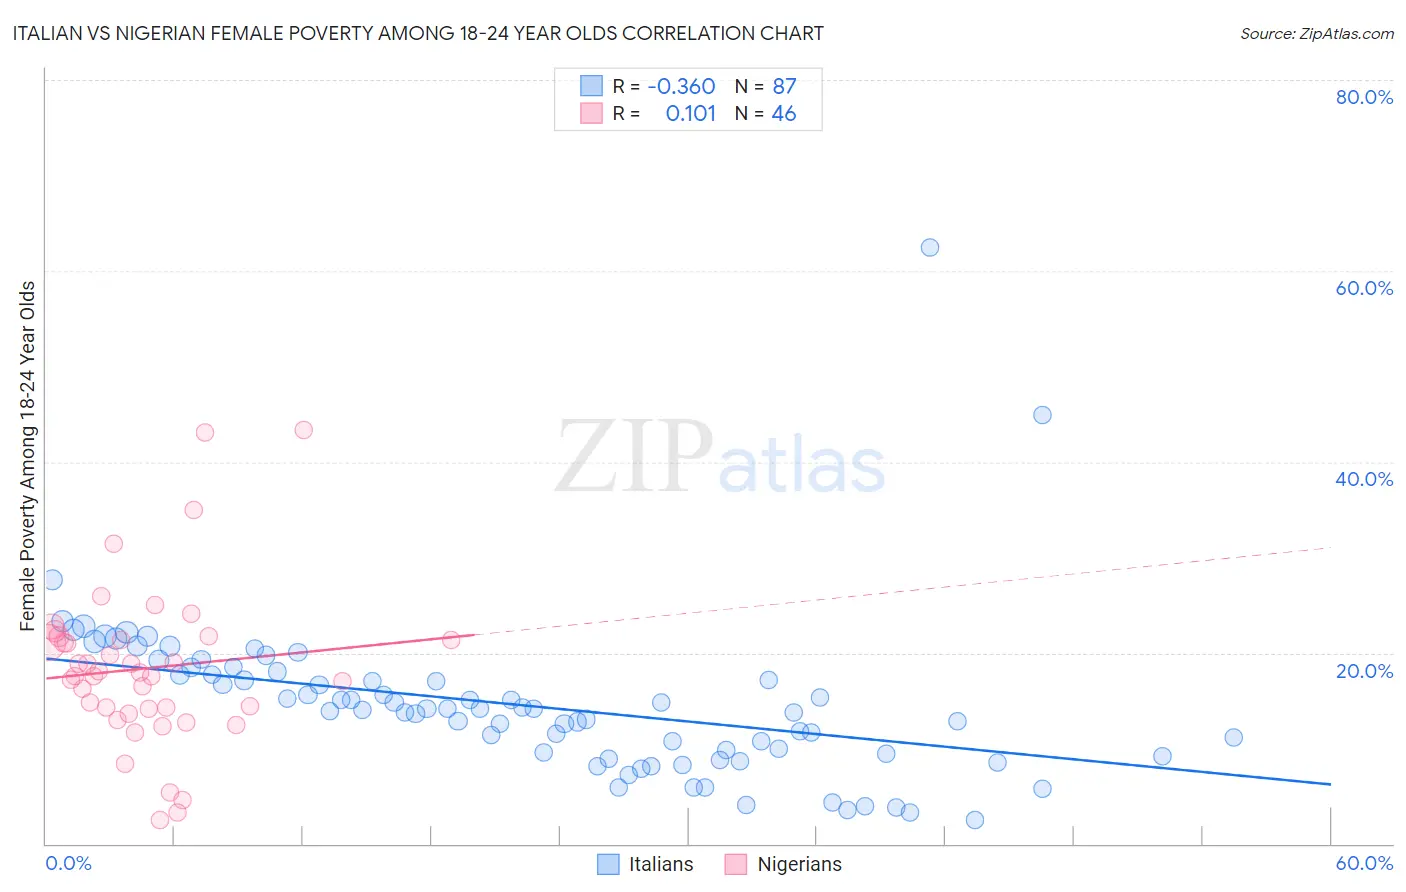 Italian vs Nigerian Female Poverty Among 18-24 Year Olds